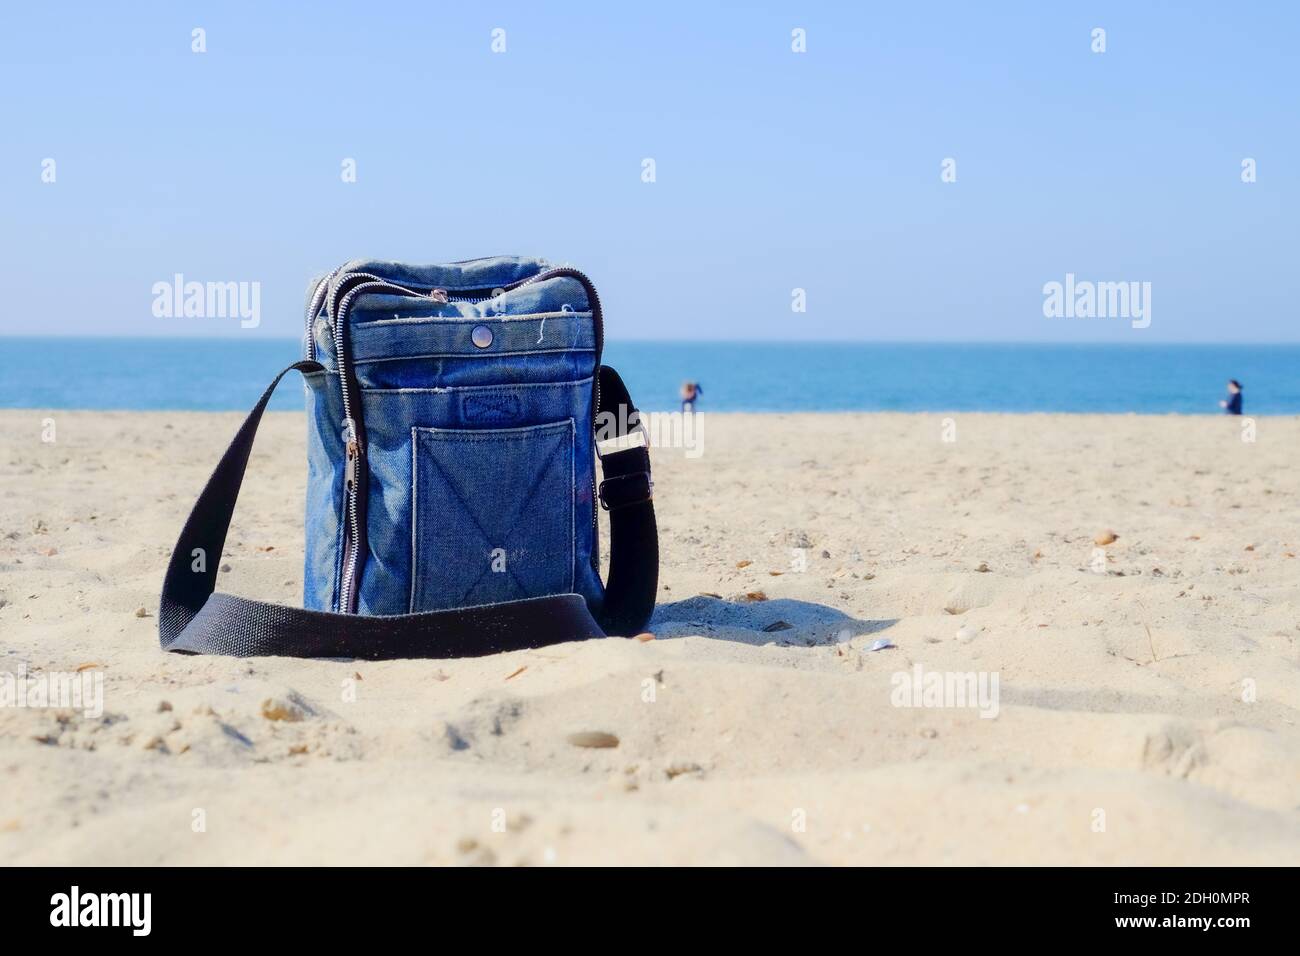 Blue denim bag with black strap on sandy beach Stock Photo